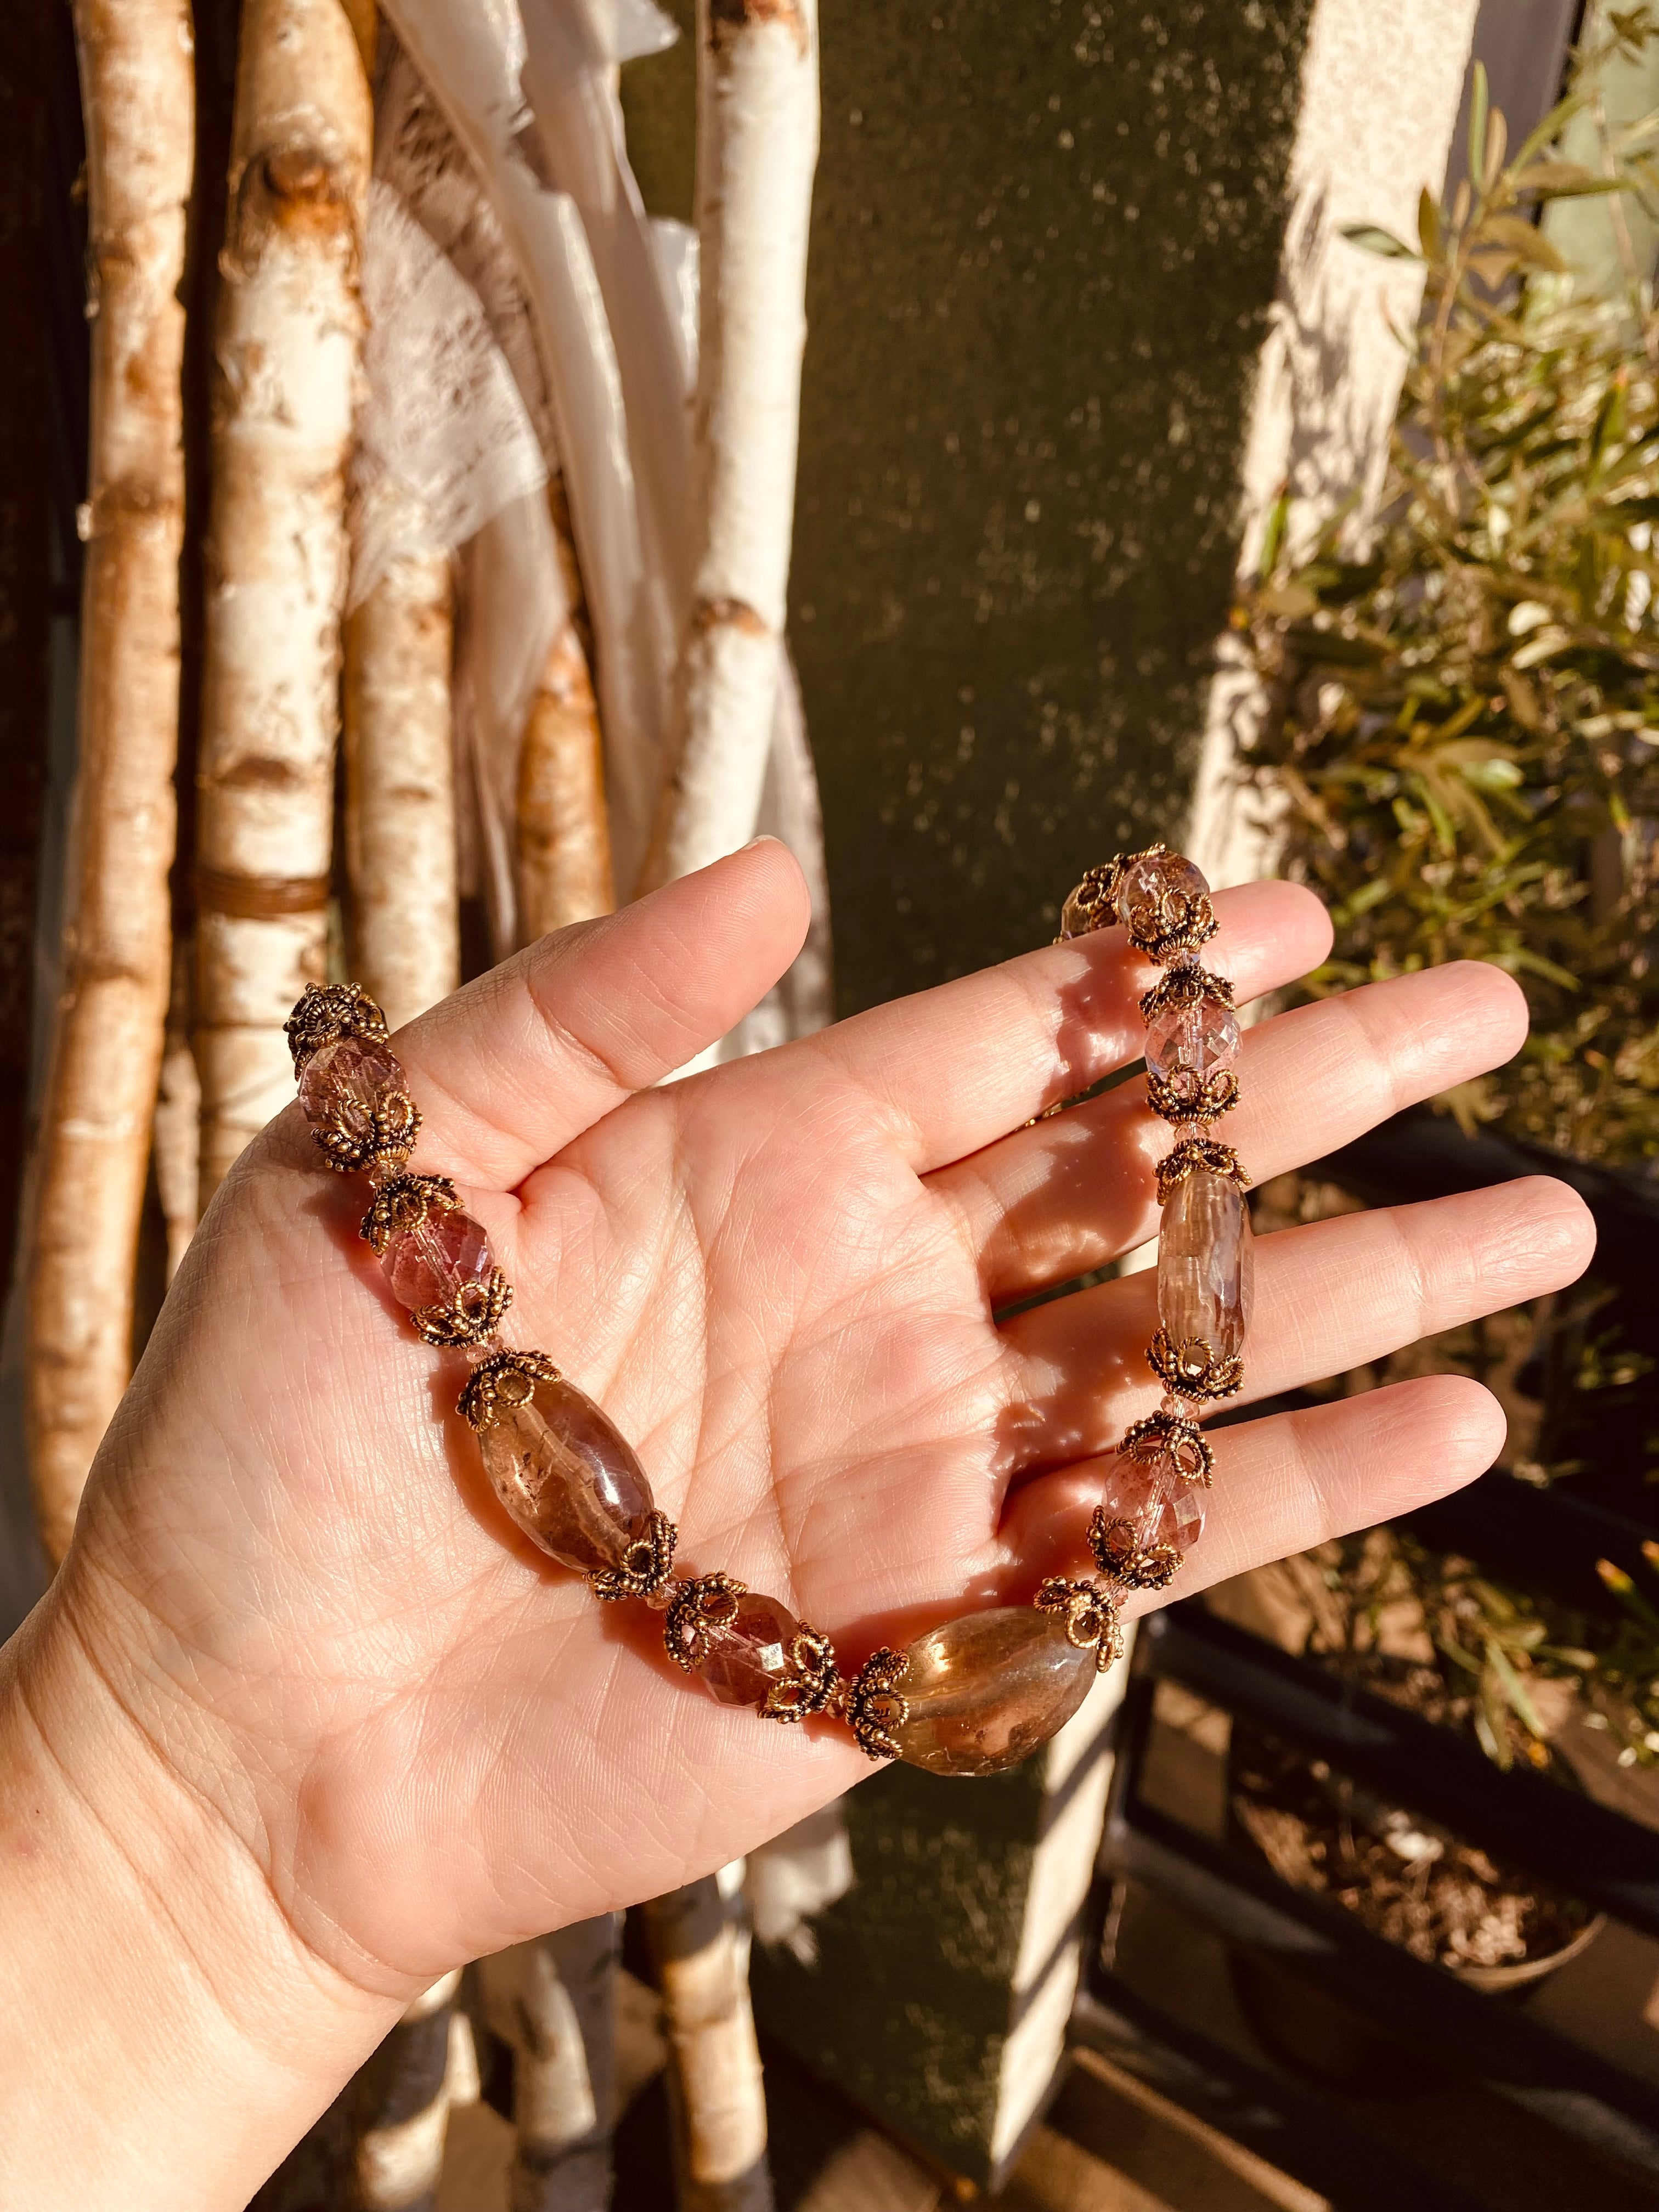 Greige quartz rococo necklace